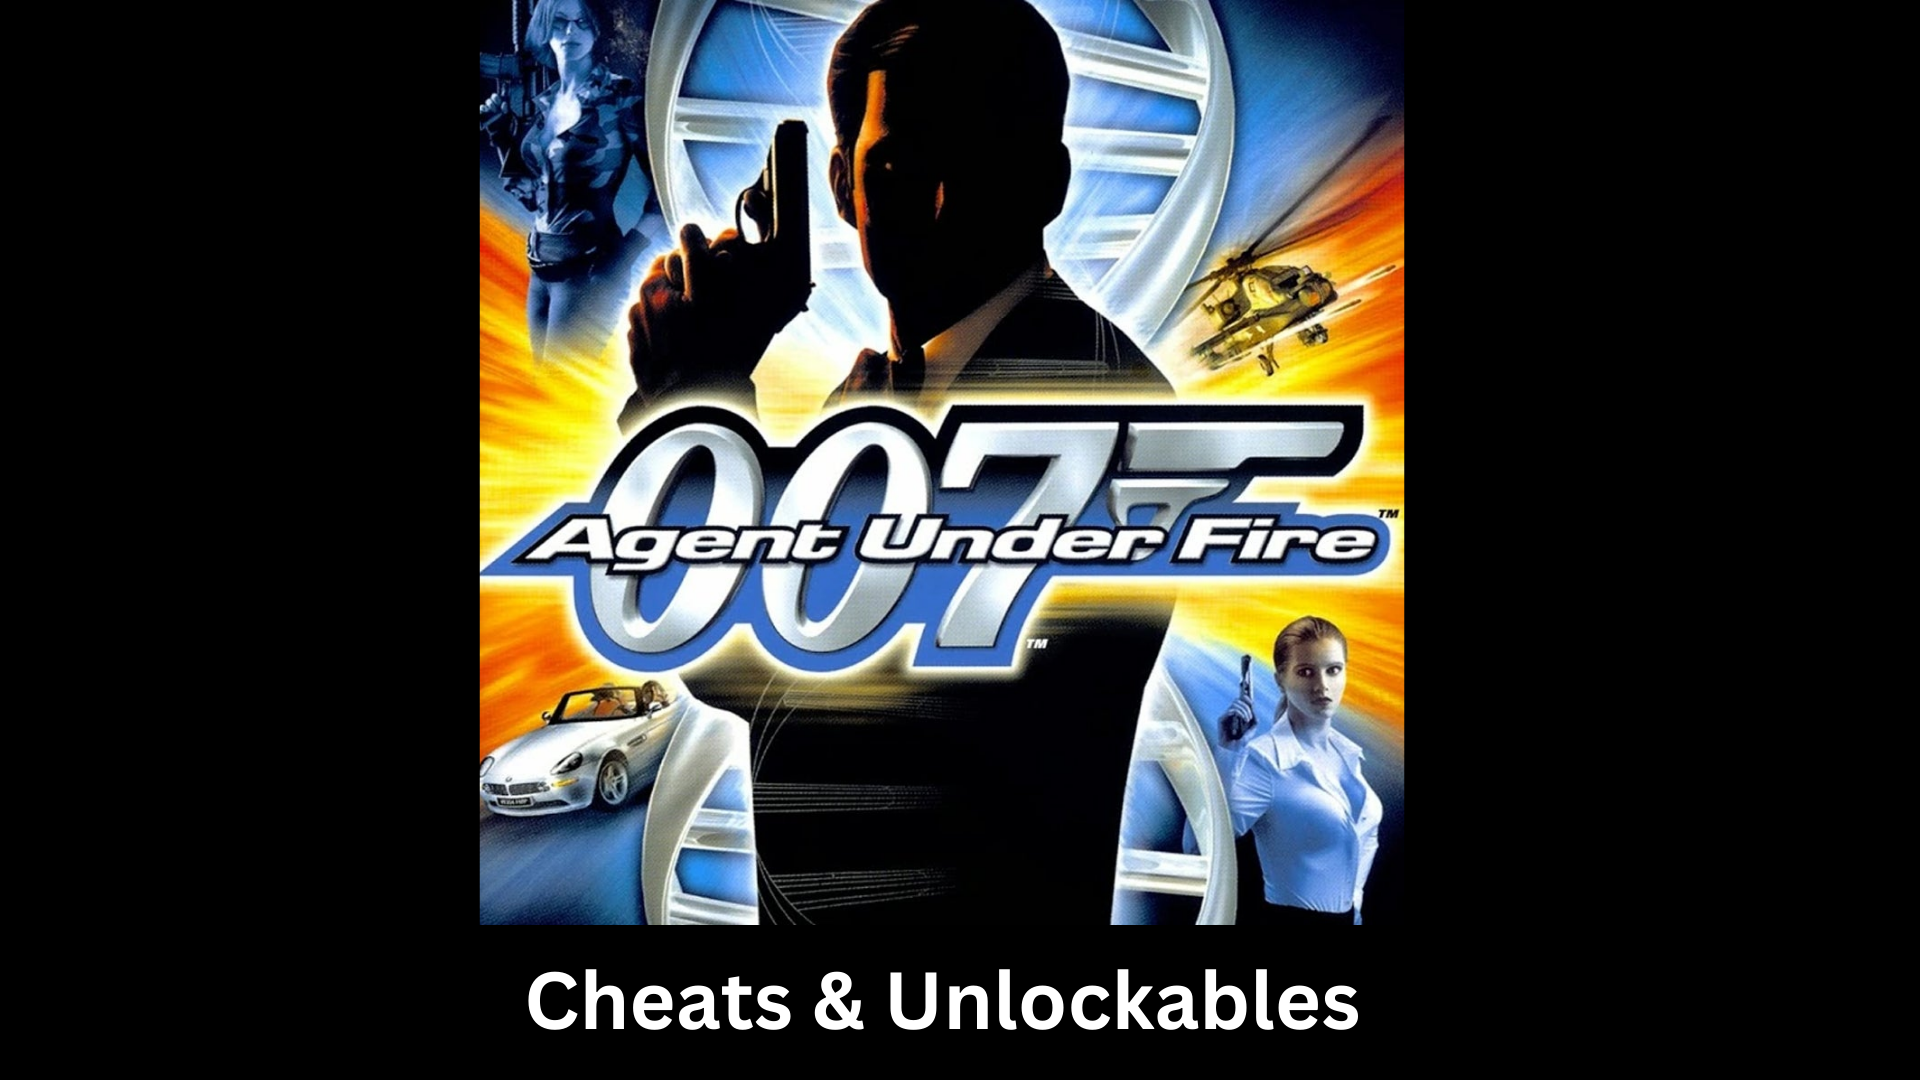 james bond 007 agent under fire cheats and unlockables